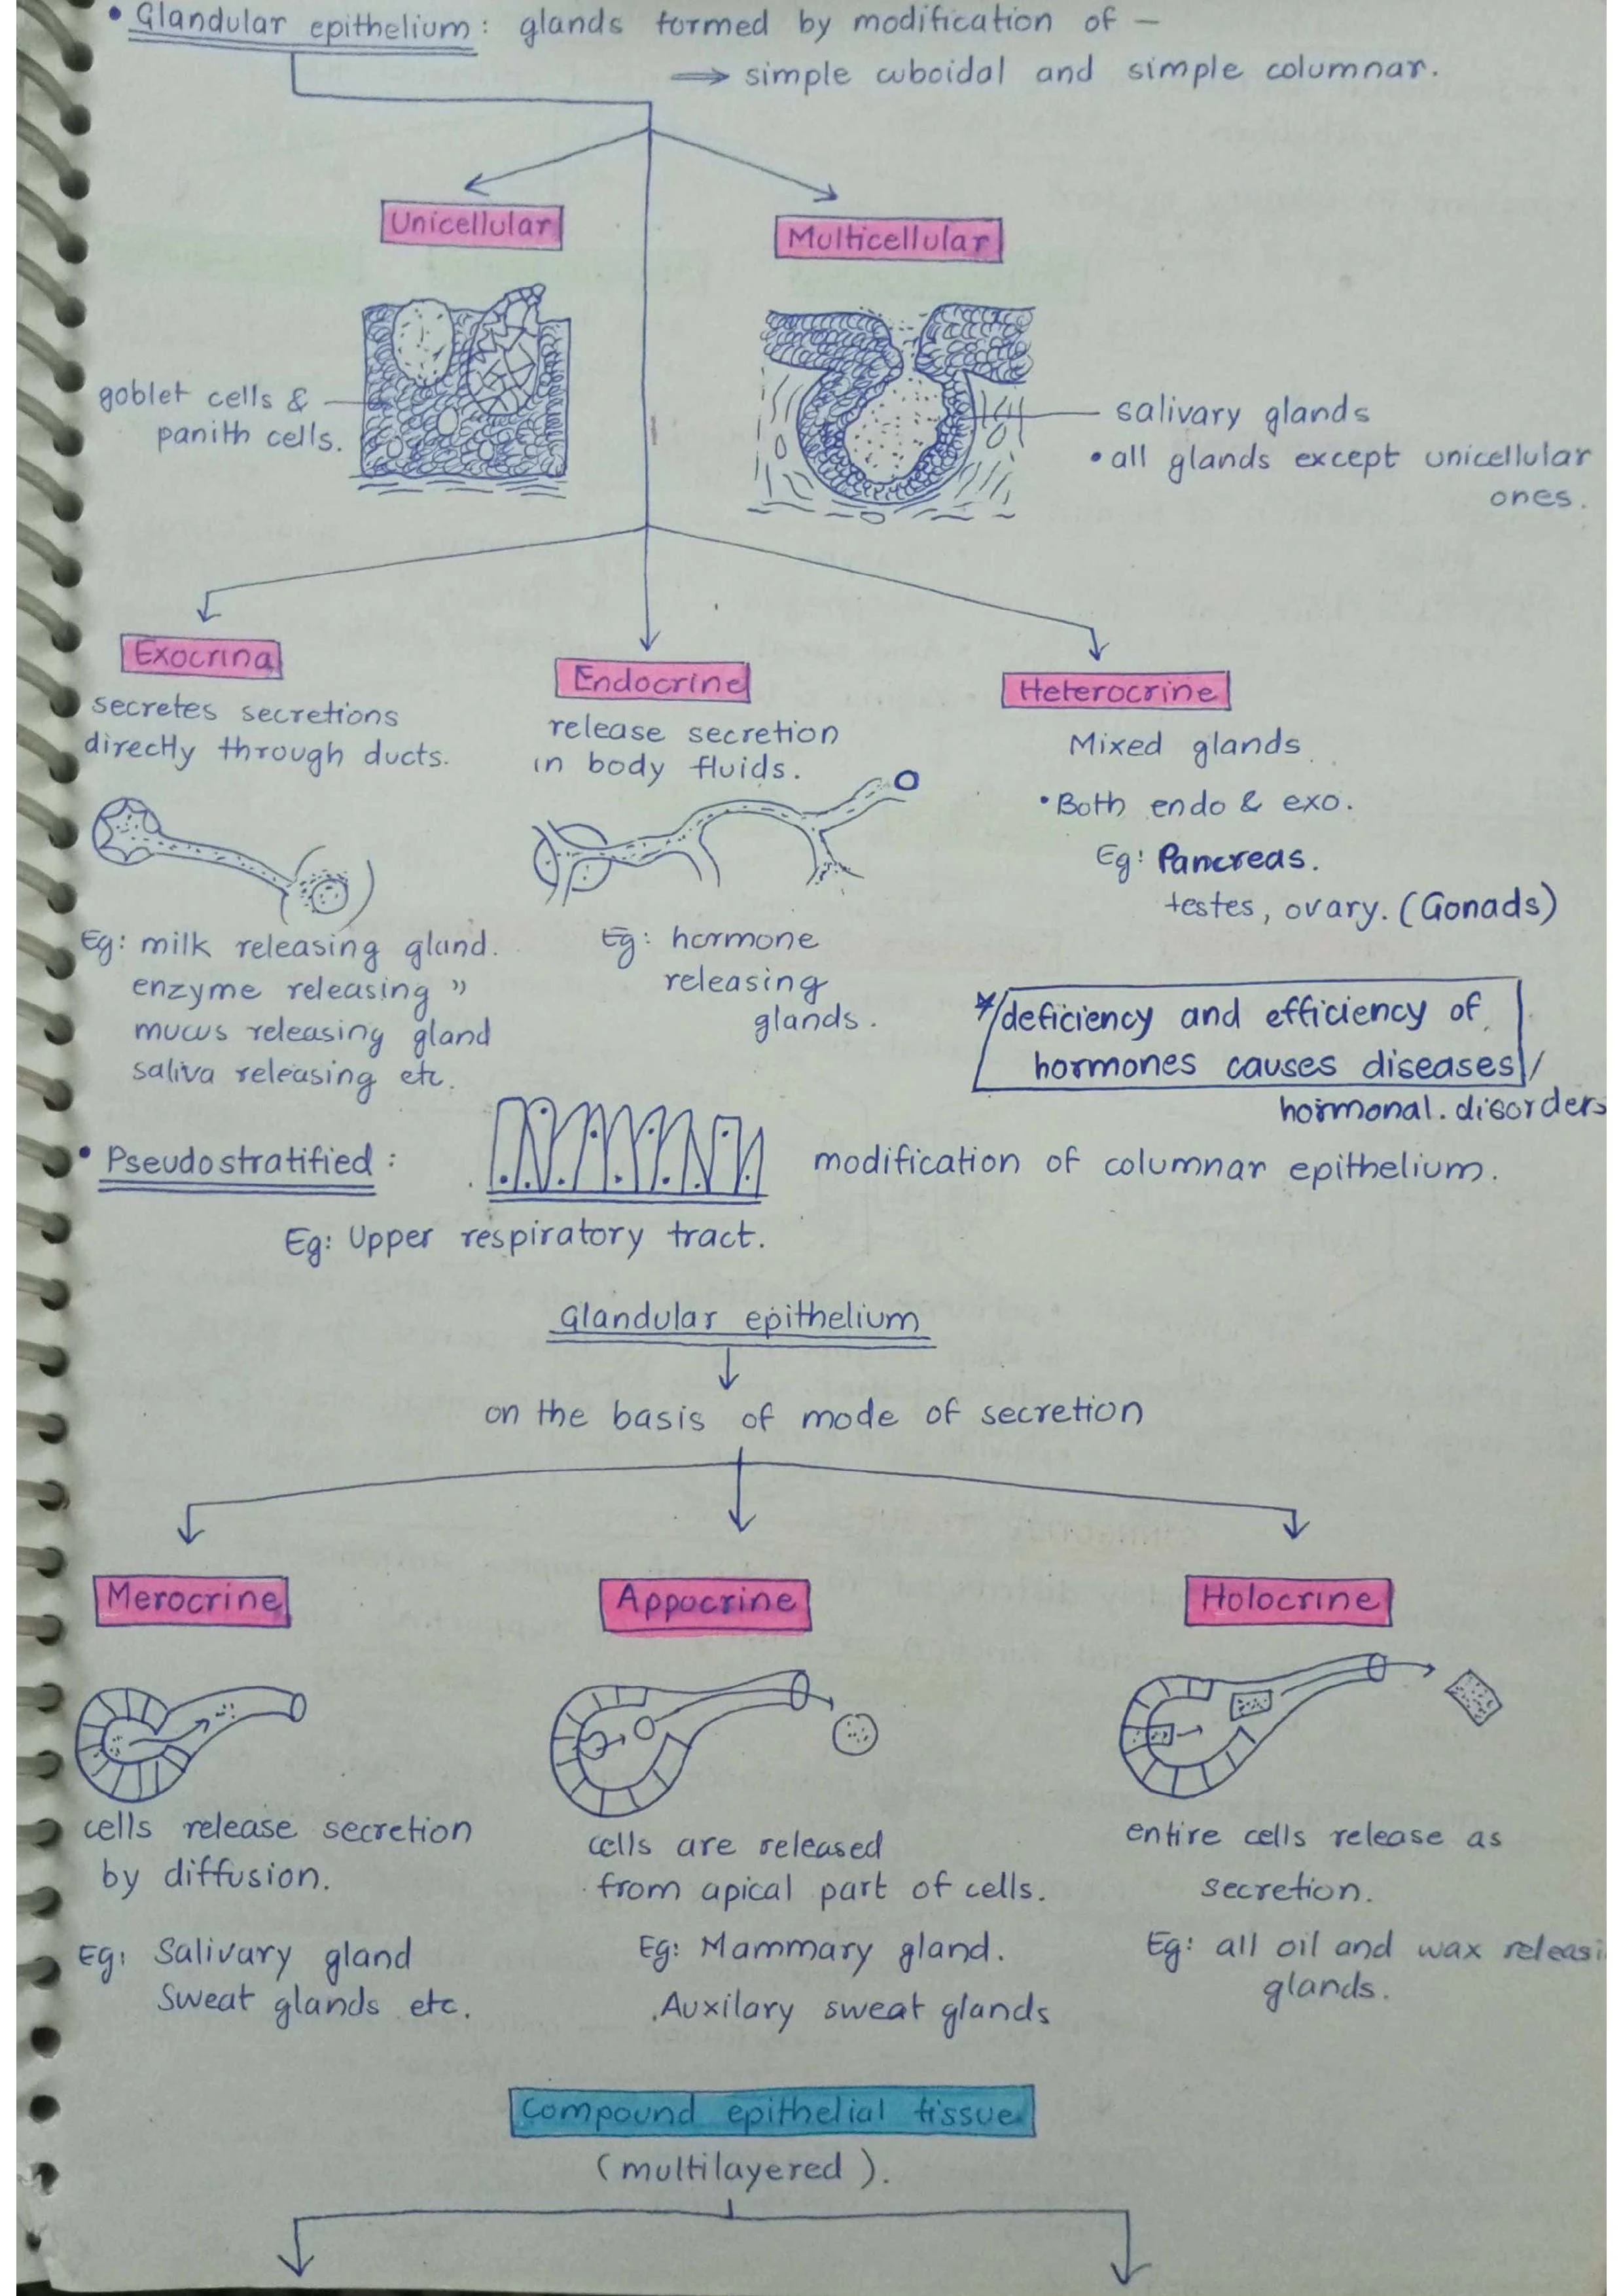 Animal Tissues - Biology Short Notes 📚